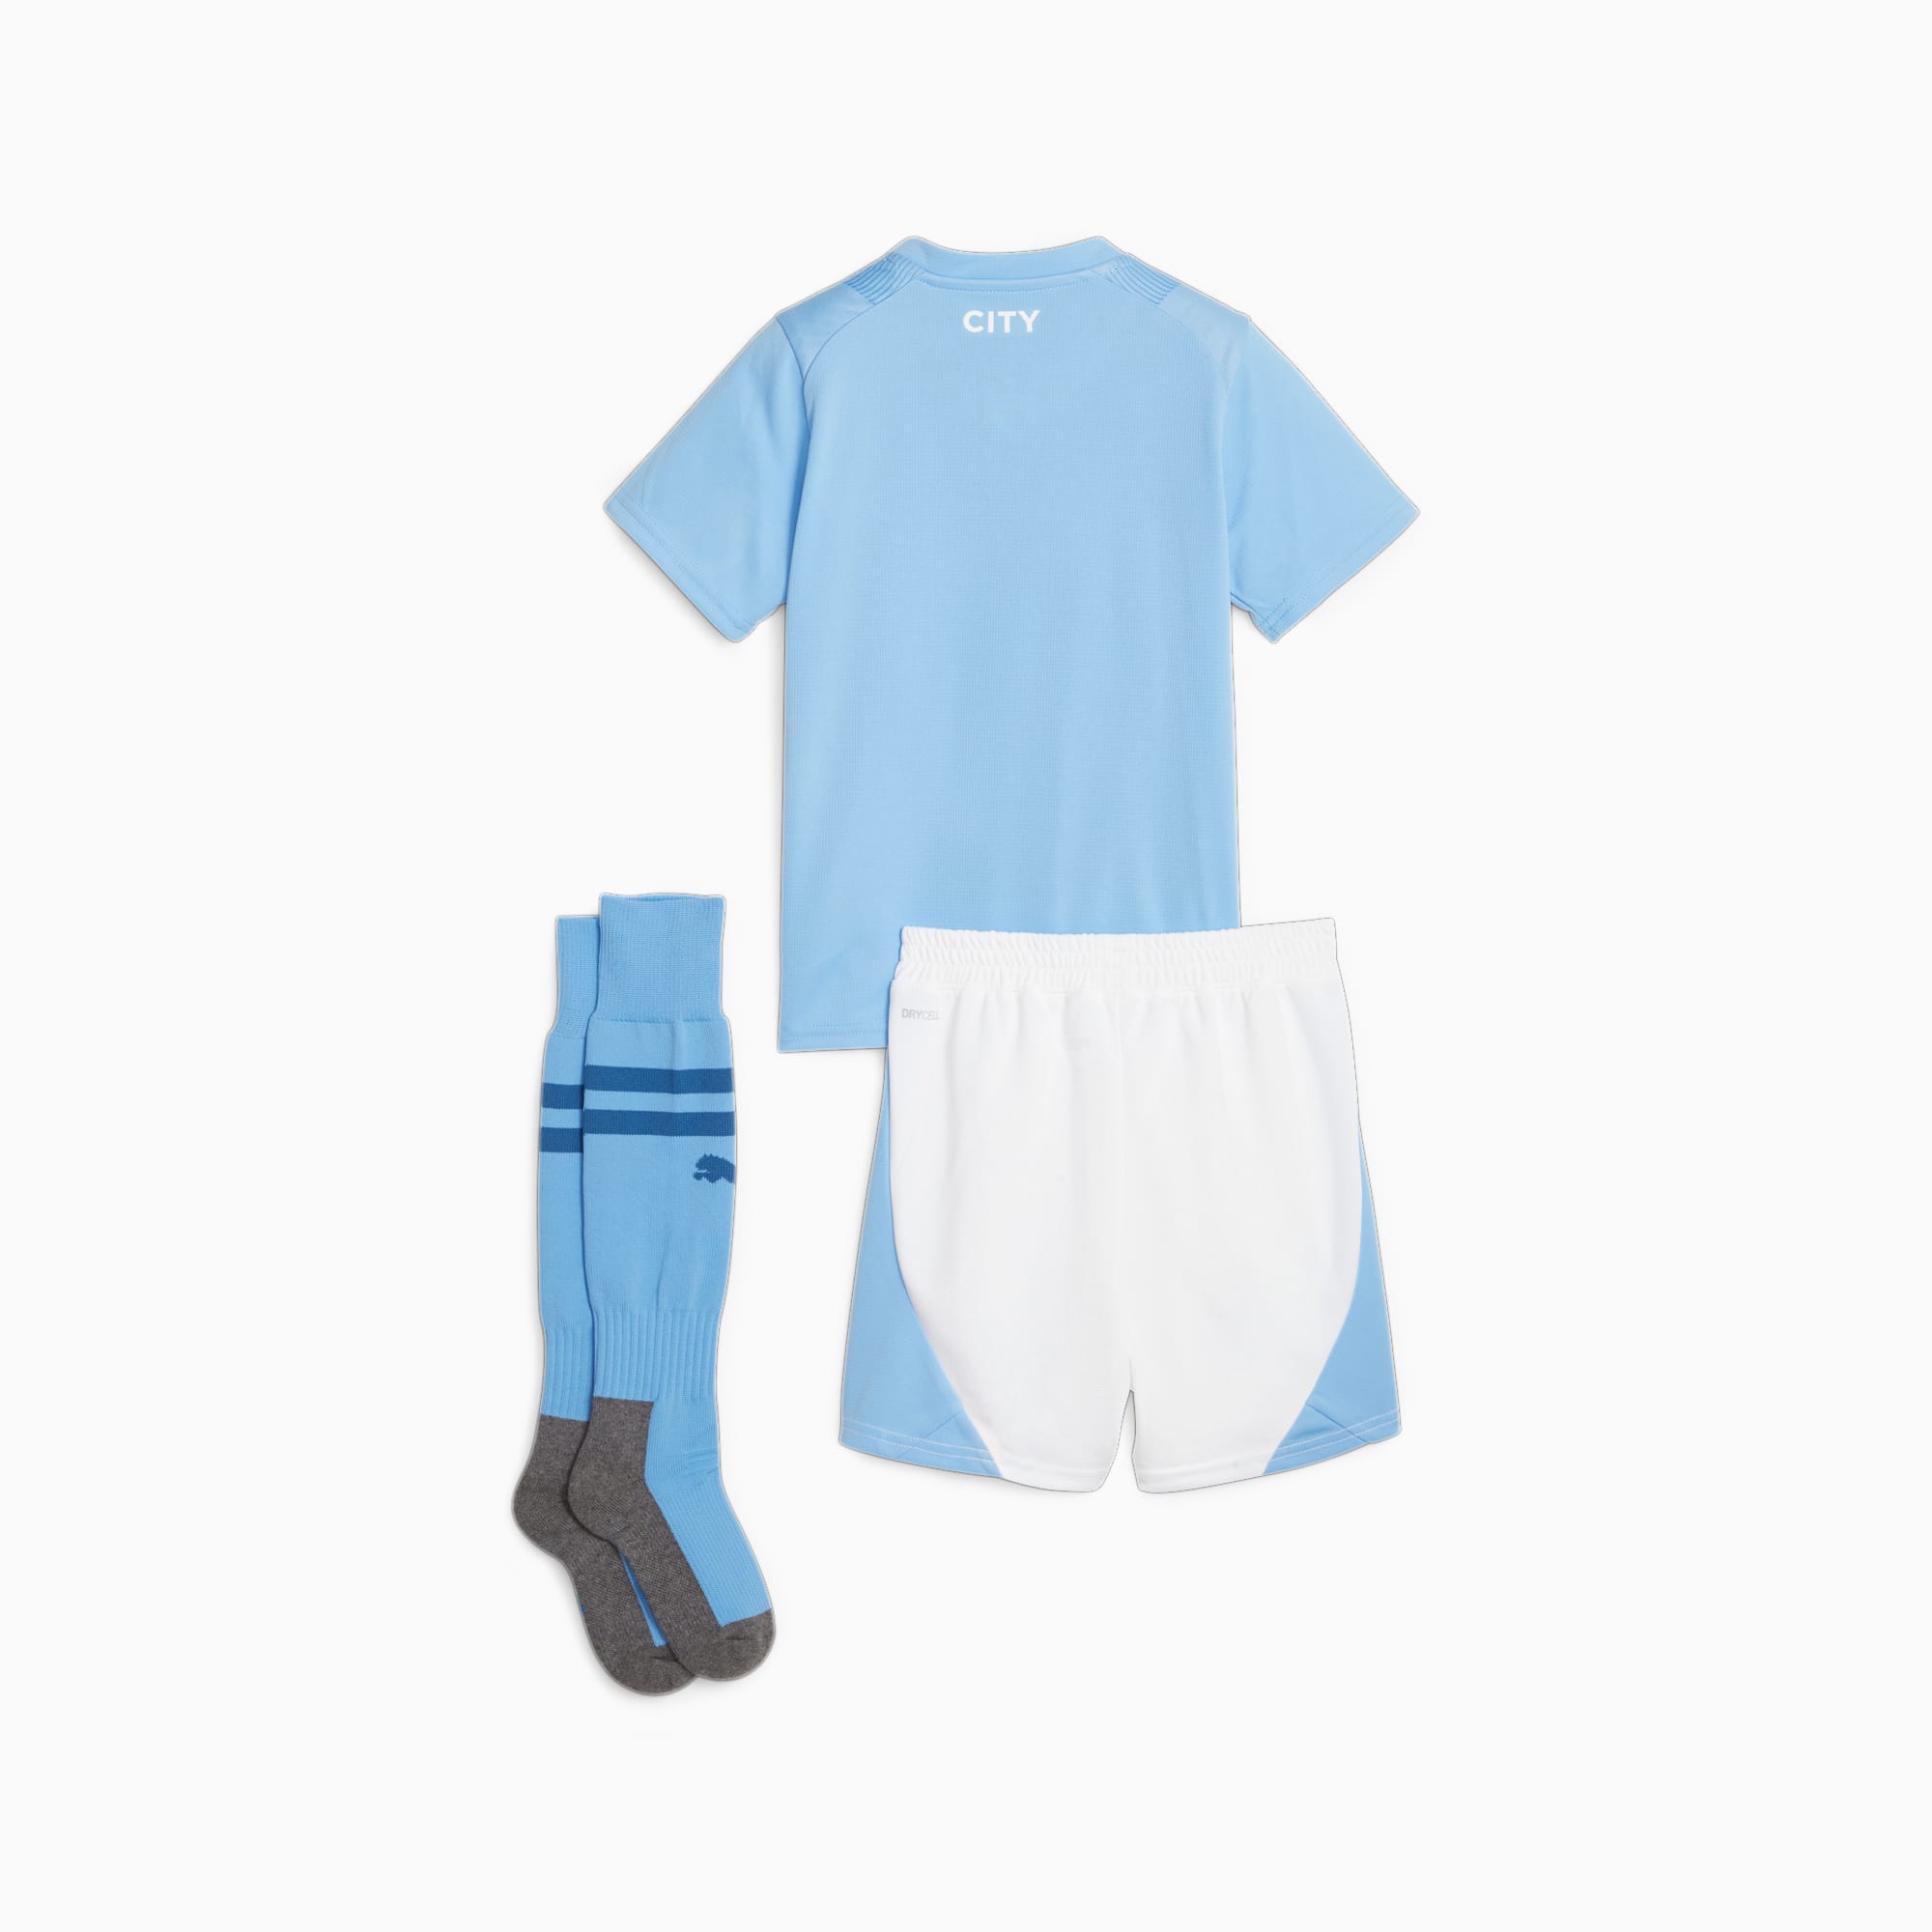 PUMA Manchester City F.C. Home Mini Kit Kinder, Blau/Weiß, Größe: 110, Kleidung